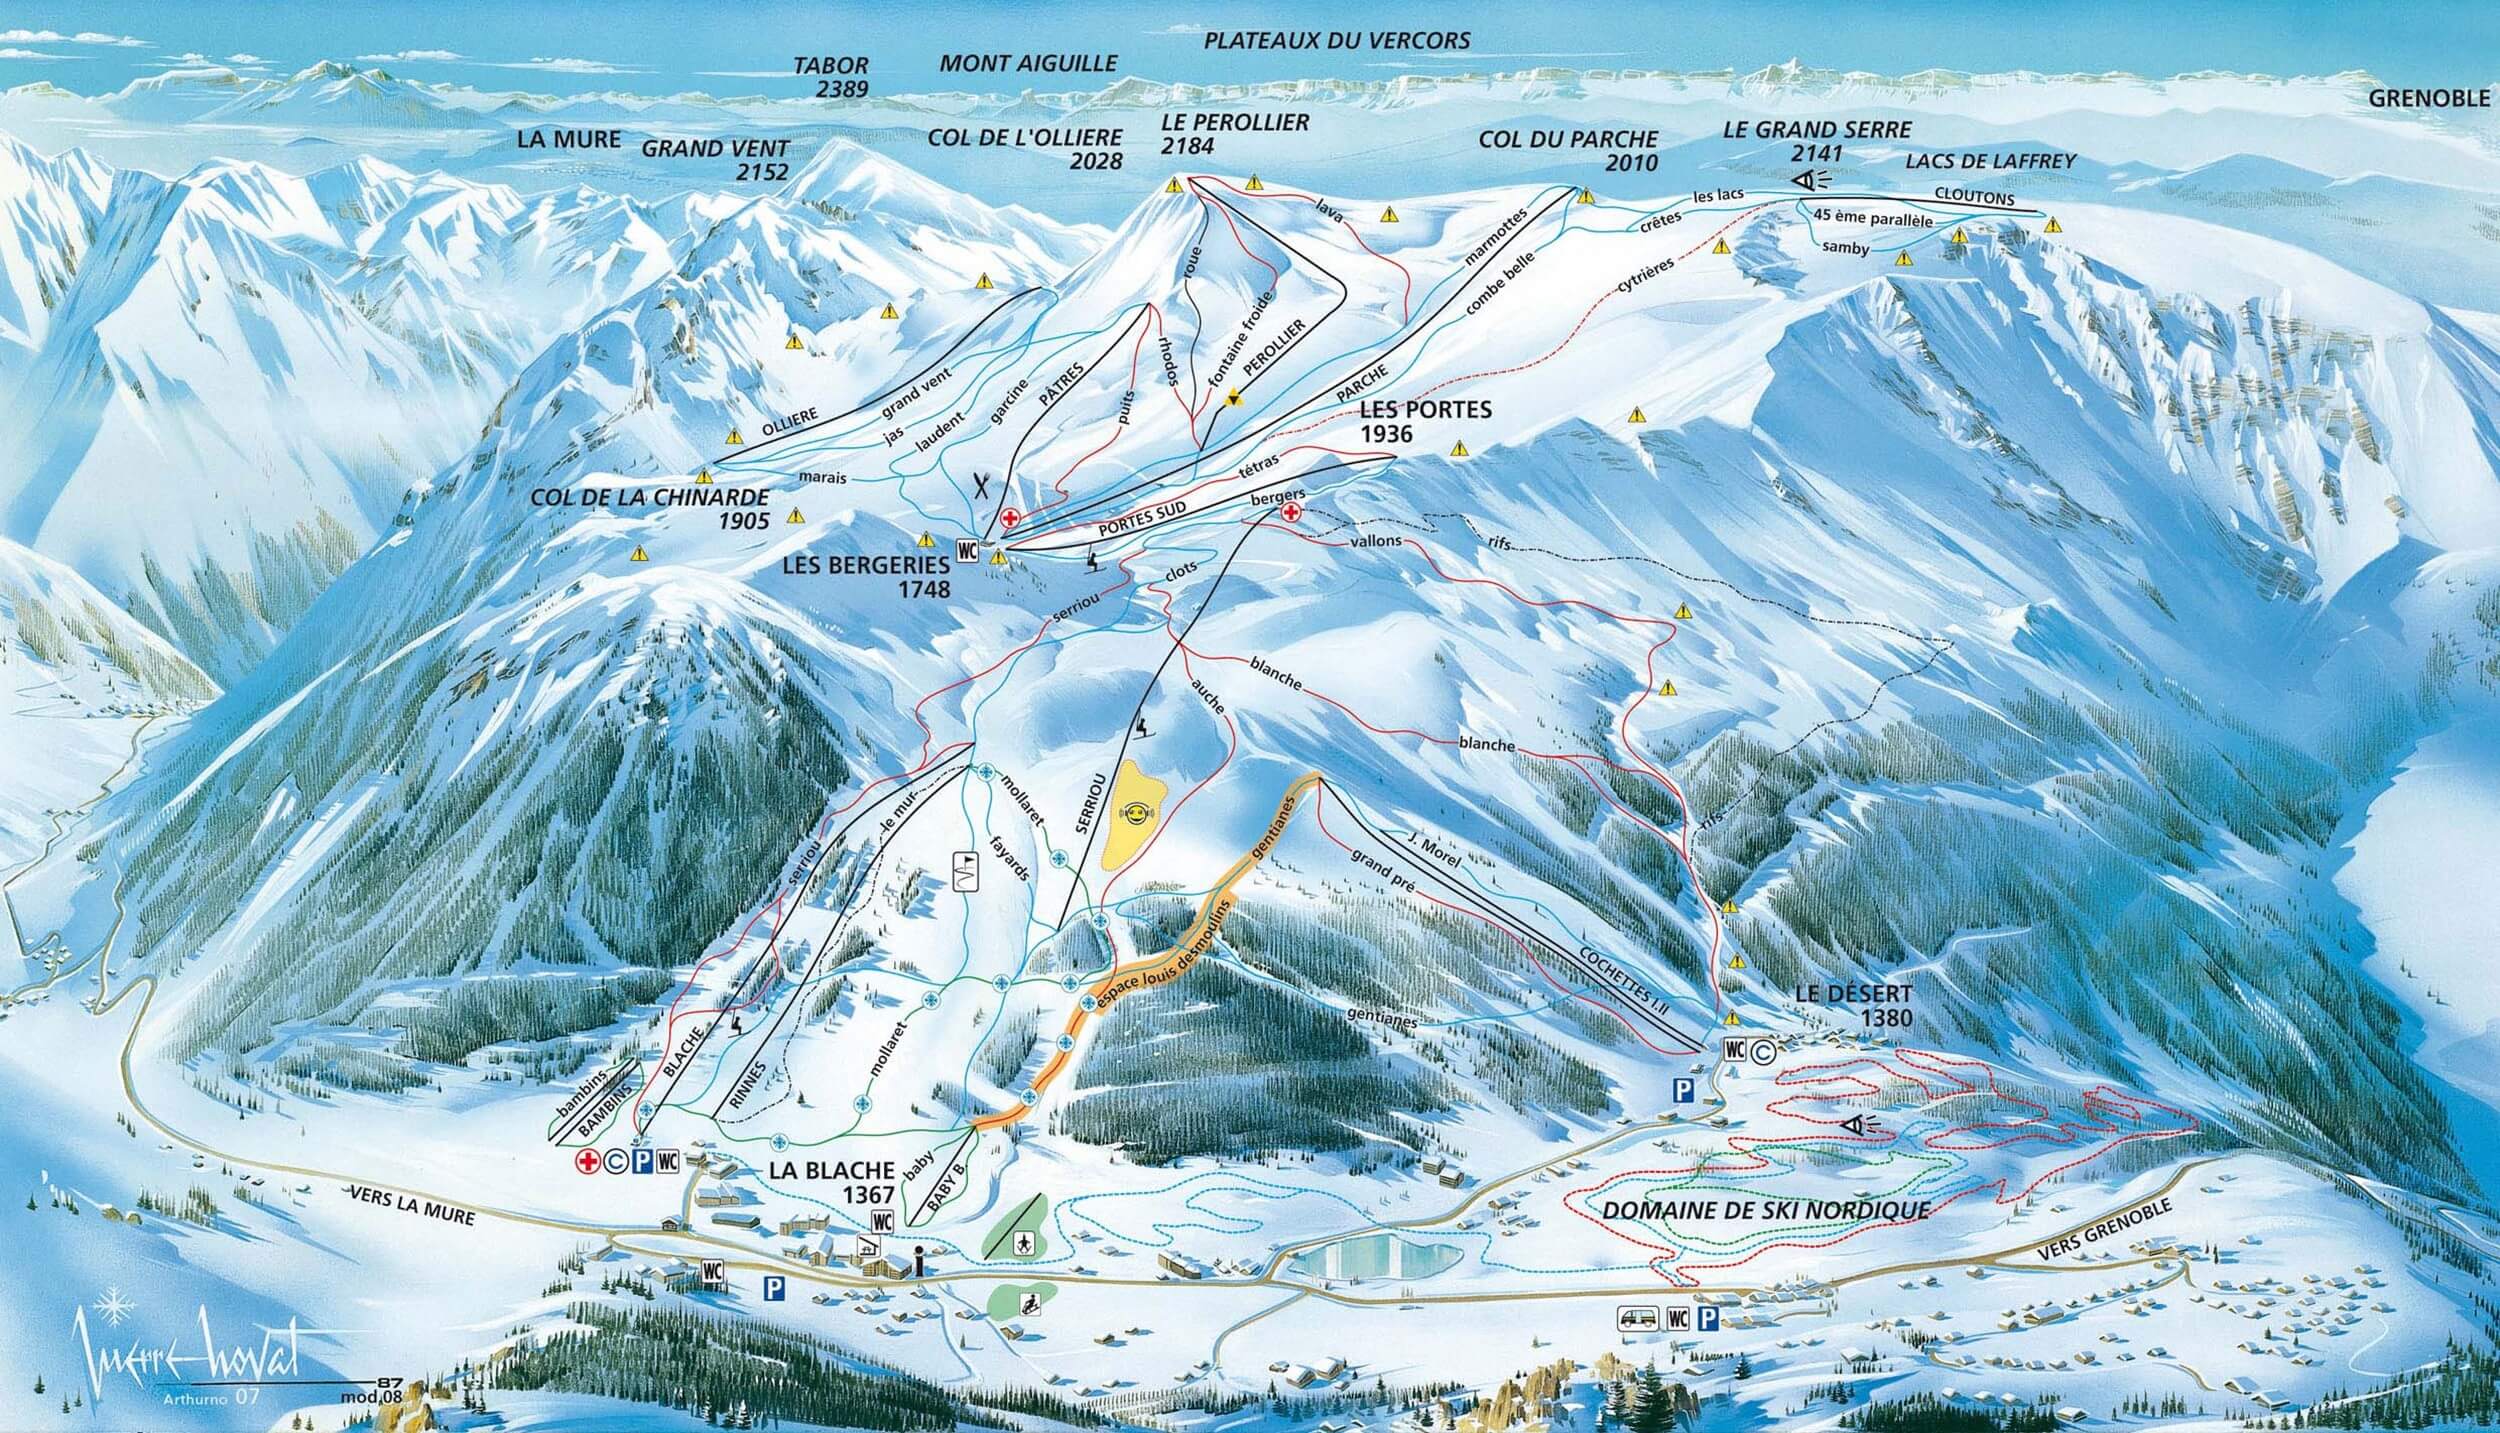 Alpe du Grand Serre slopes